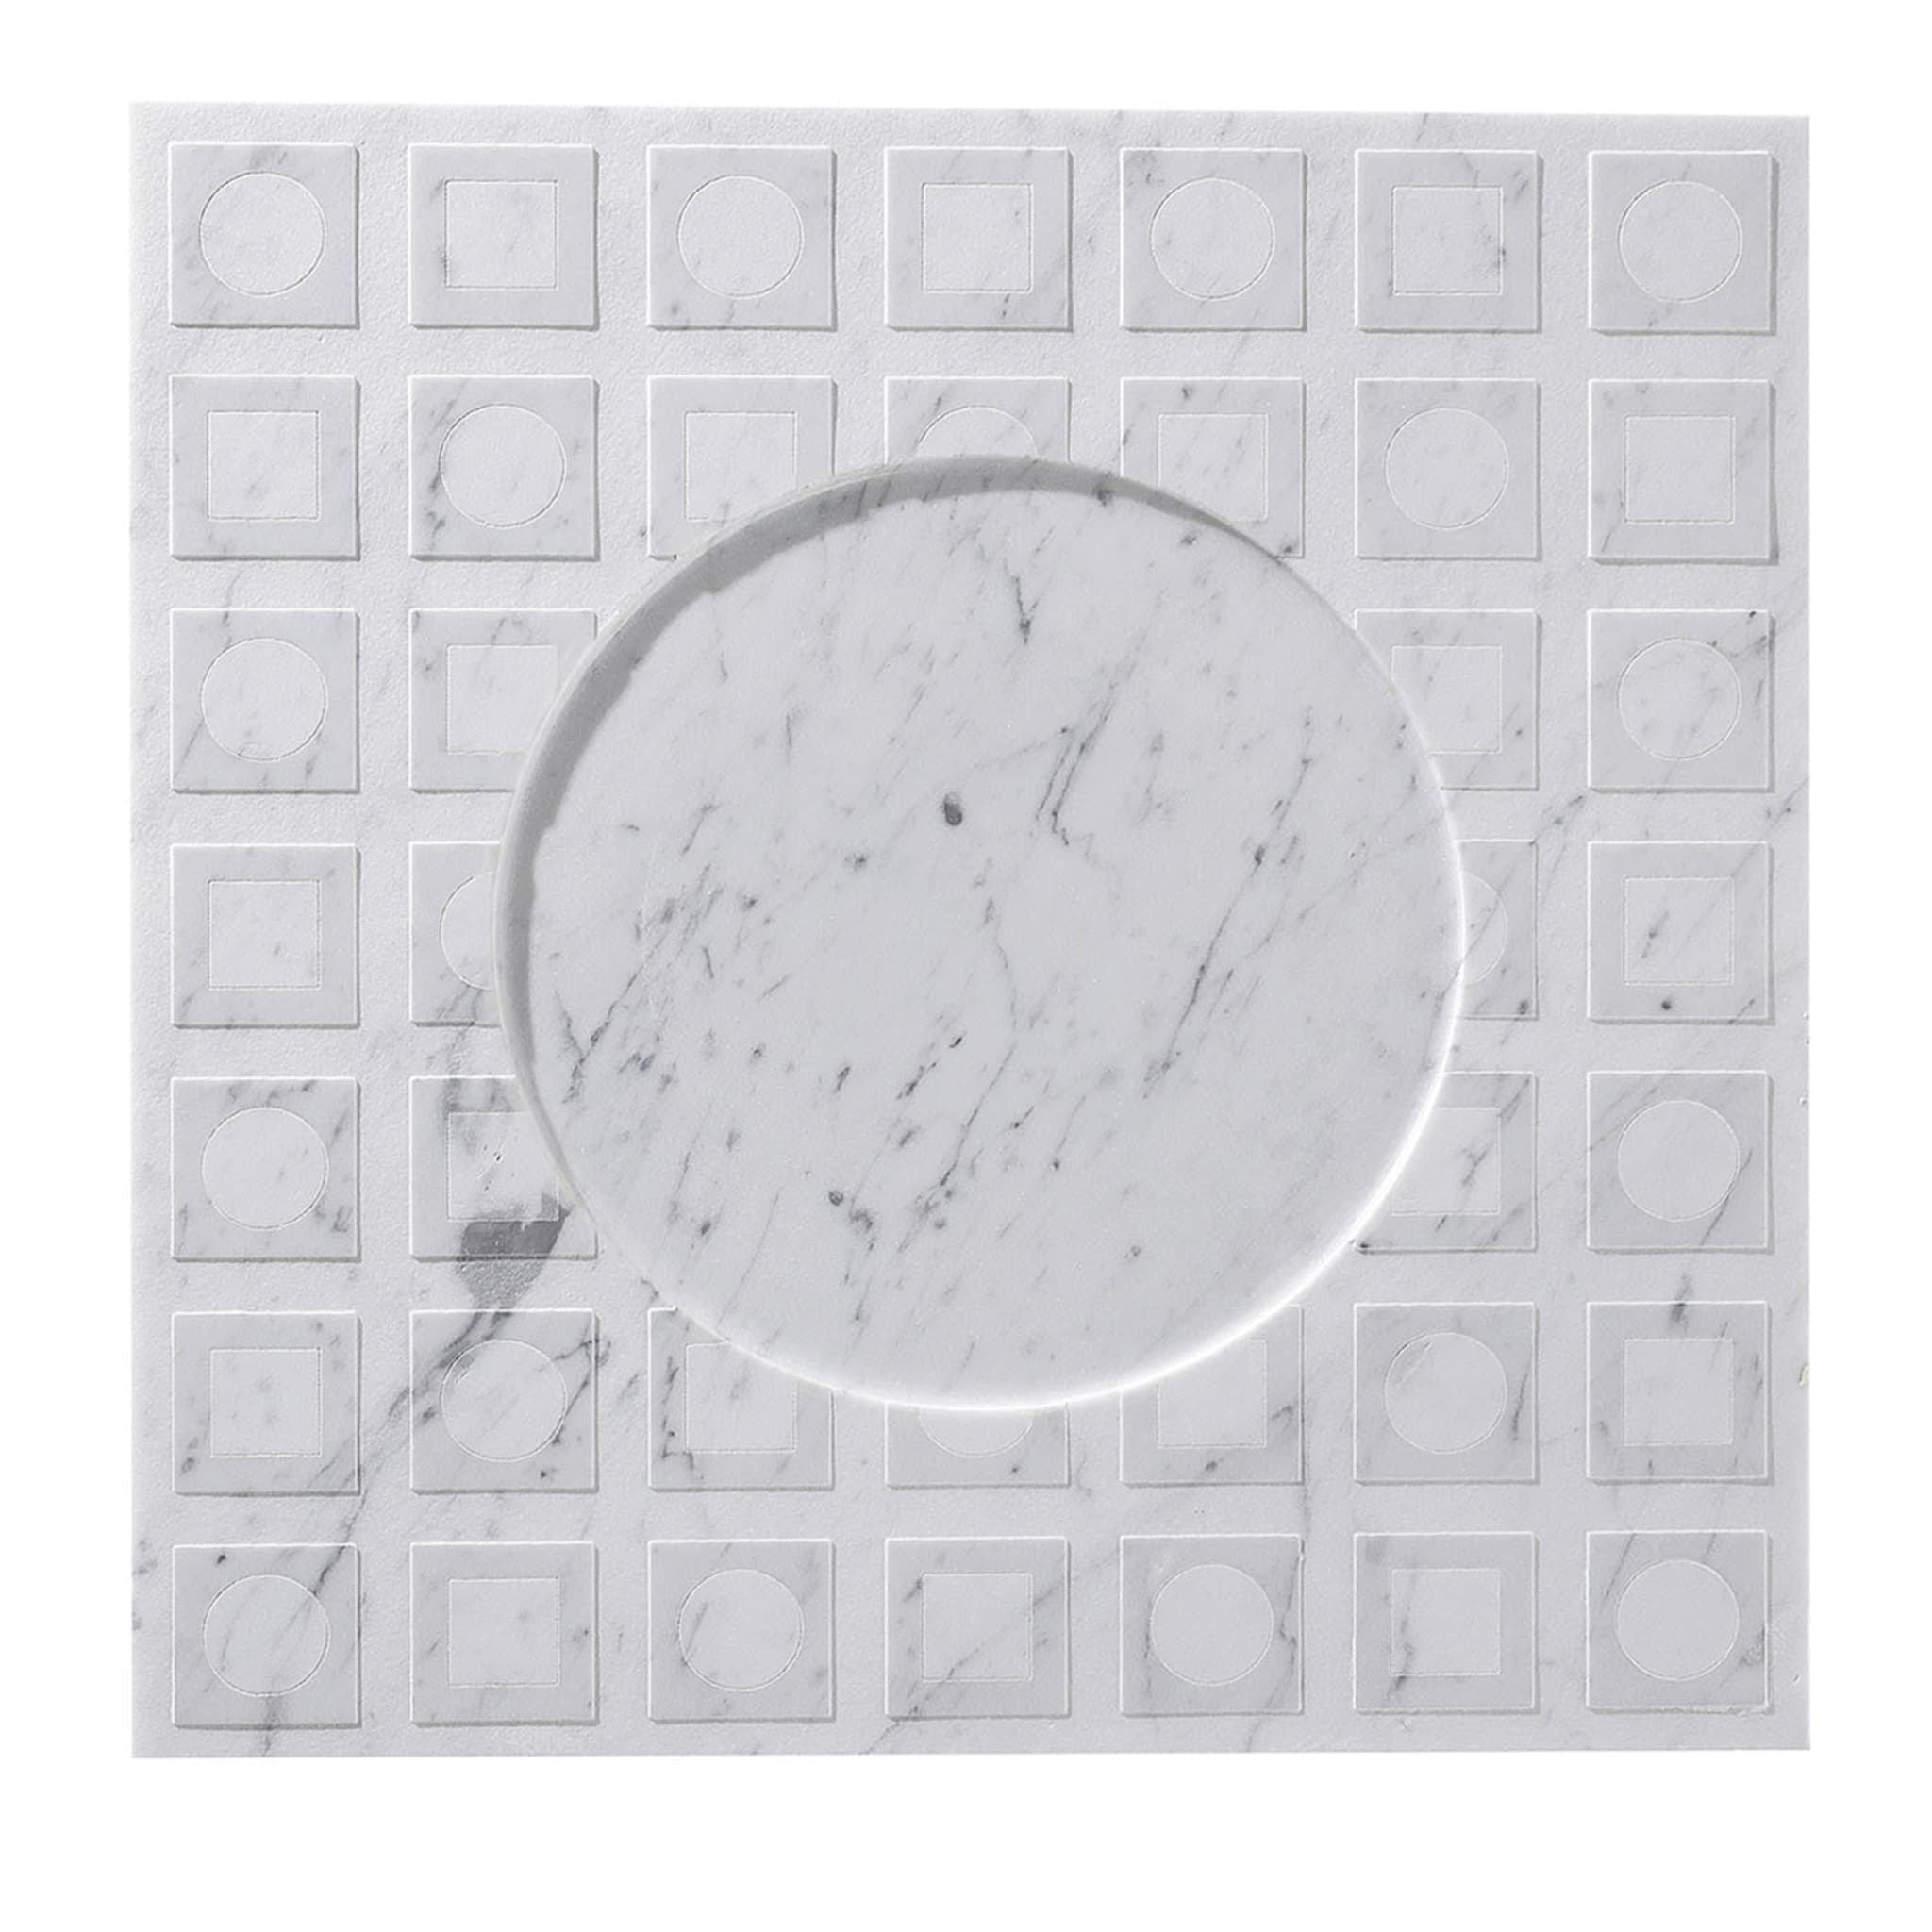 Roma Teller Q aus weißem Carrara-Marmor - Hauptansicht